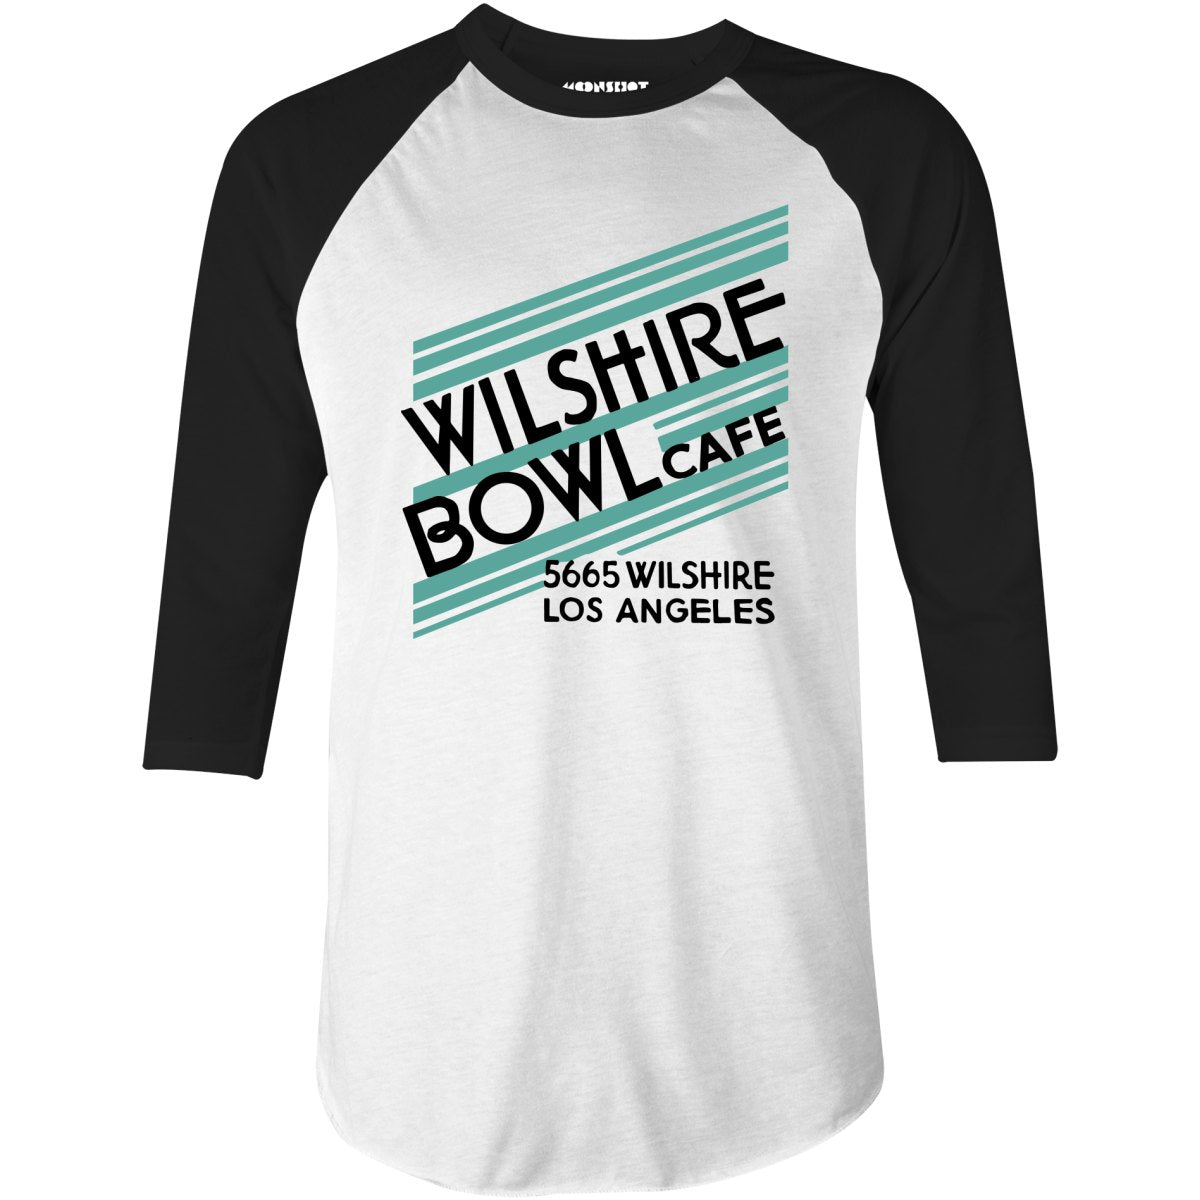 Wilshire Bowl Cafe - Los Angeles, CA - Vintage Restaurant - 3/4 Sleeve Raglan T-Shirt